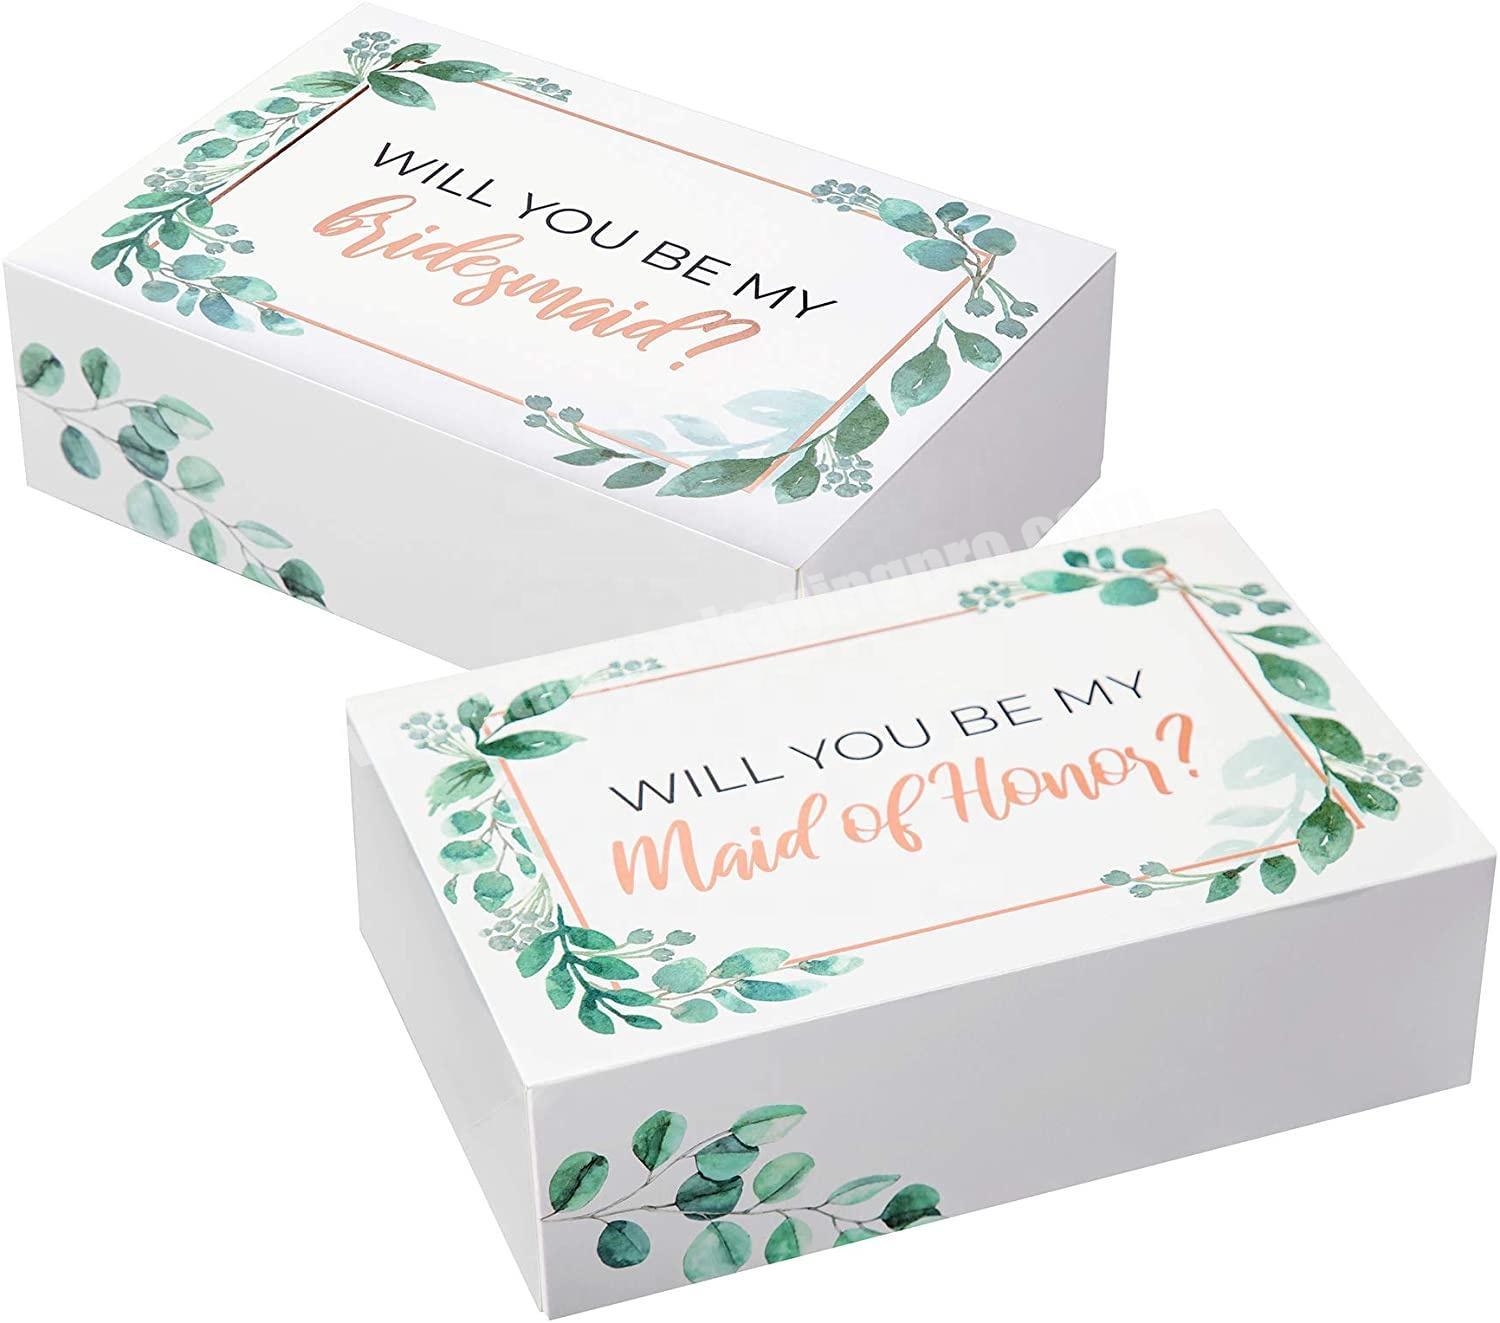 Greenery rose gold foil bridesmaid gift box wedding proposal gift box set